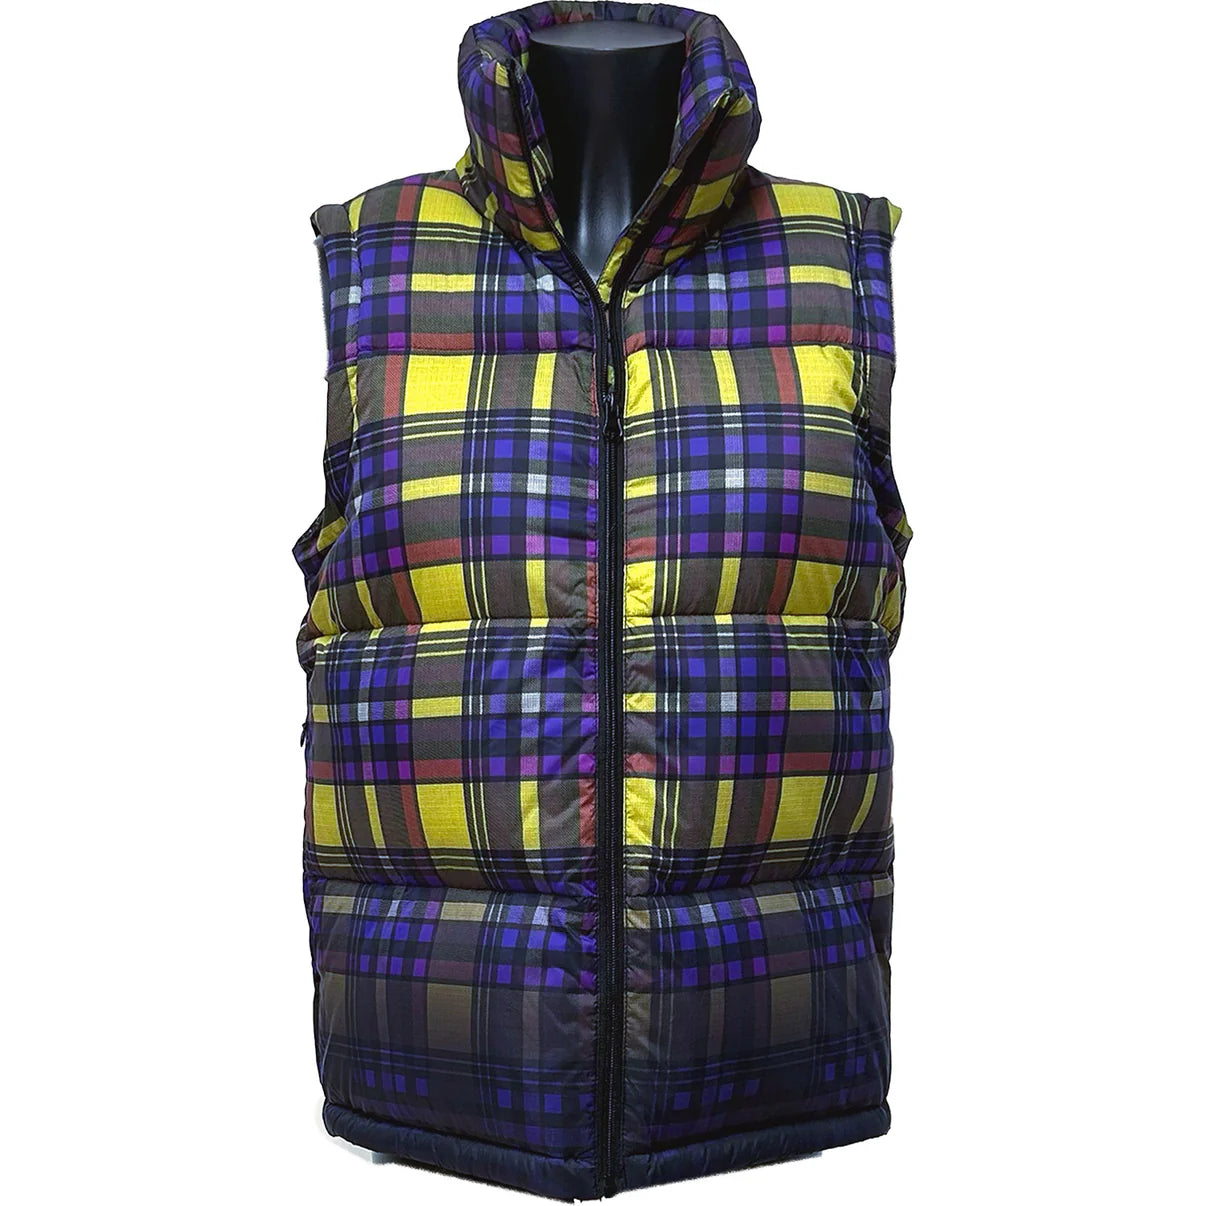 SALE downjacket tartan with detachable arms yelllow/purple